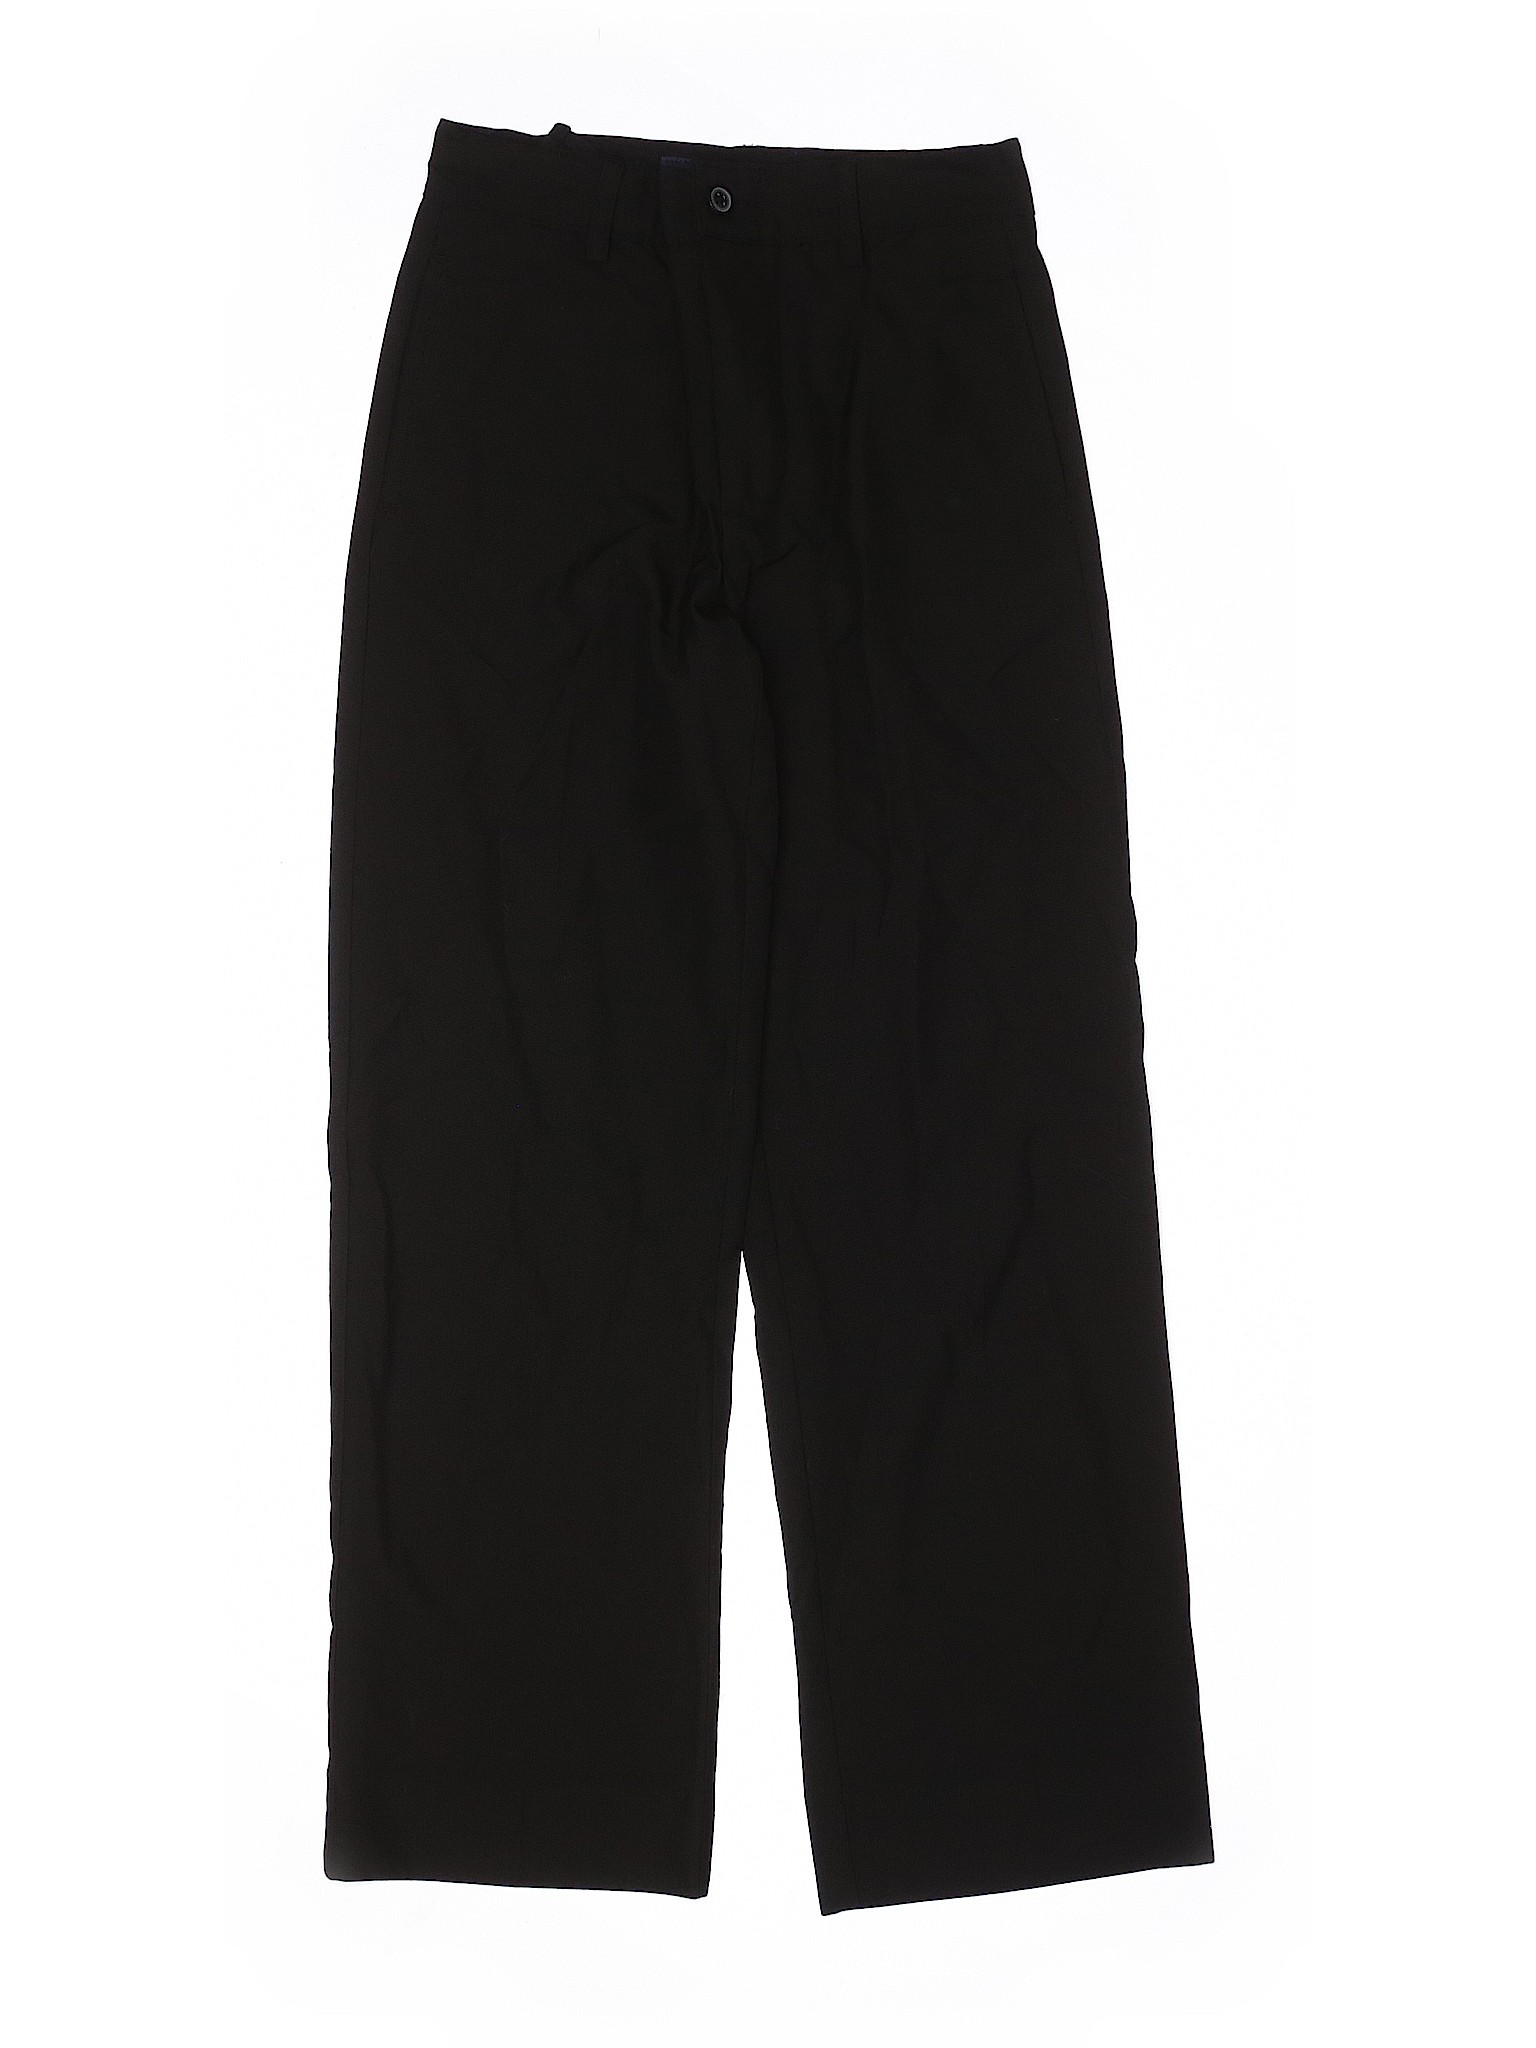 Cherokee Boys Black Dress Pants 8 | eBay